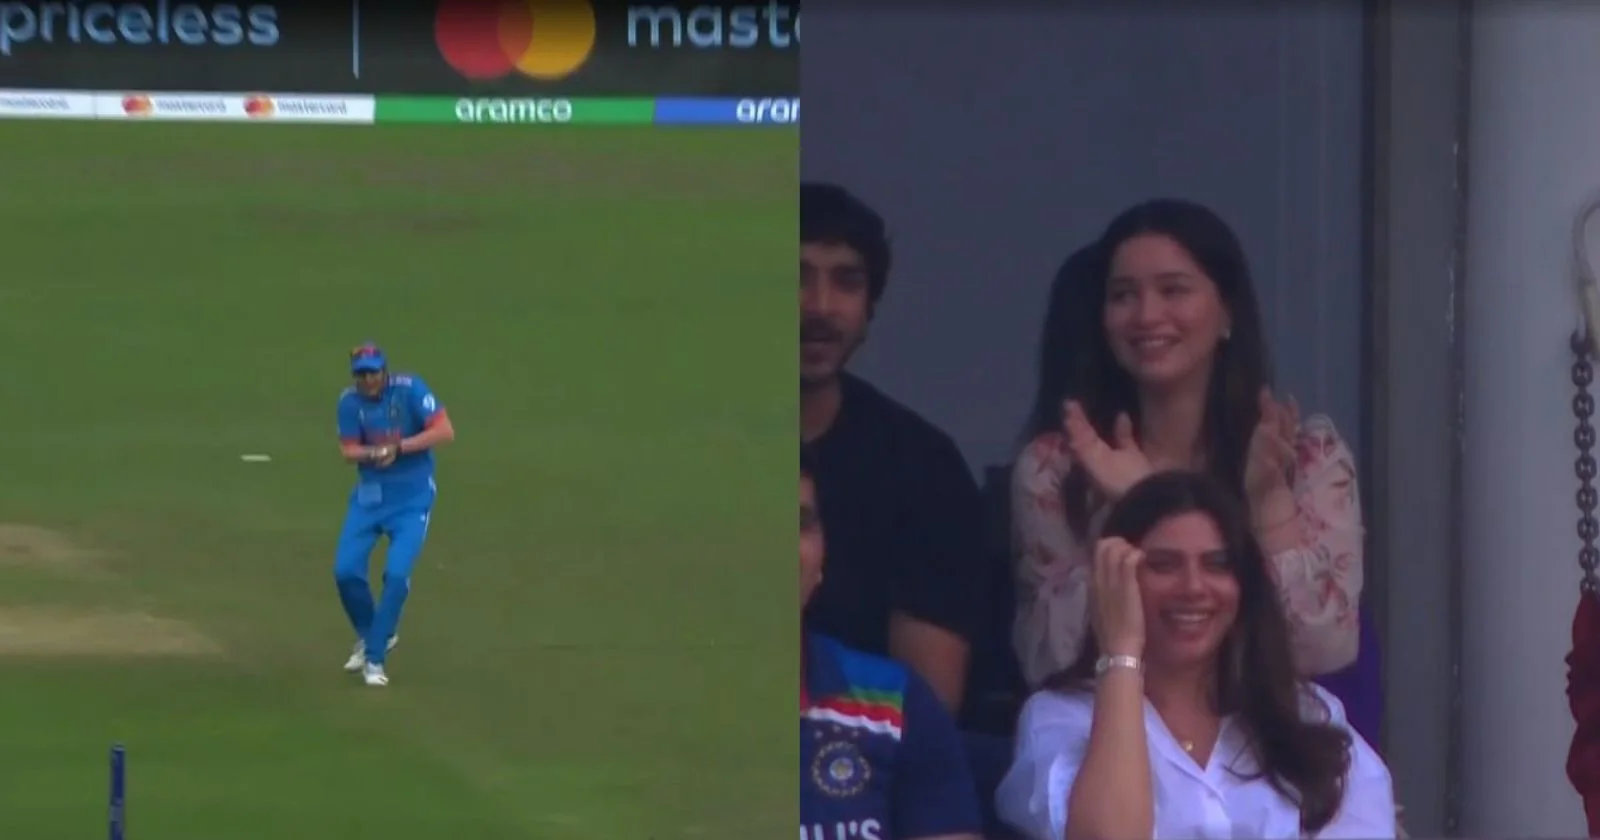 [VIDEO] Sara Tendulkar Laughs And Claps After Shubman Gill's Catch